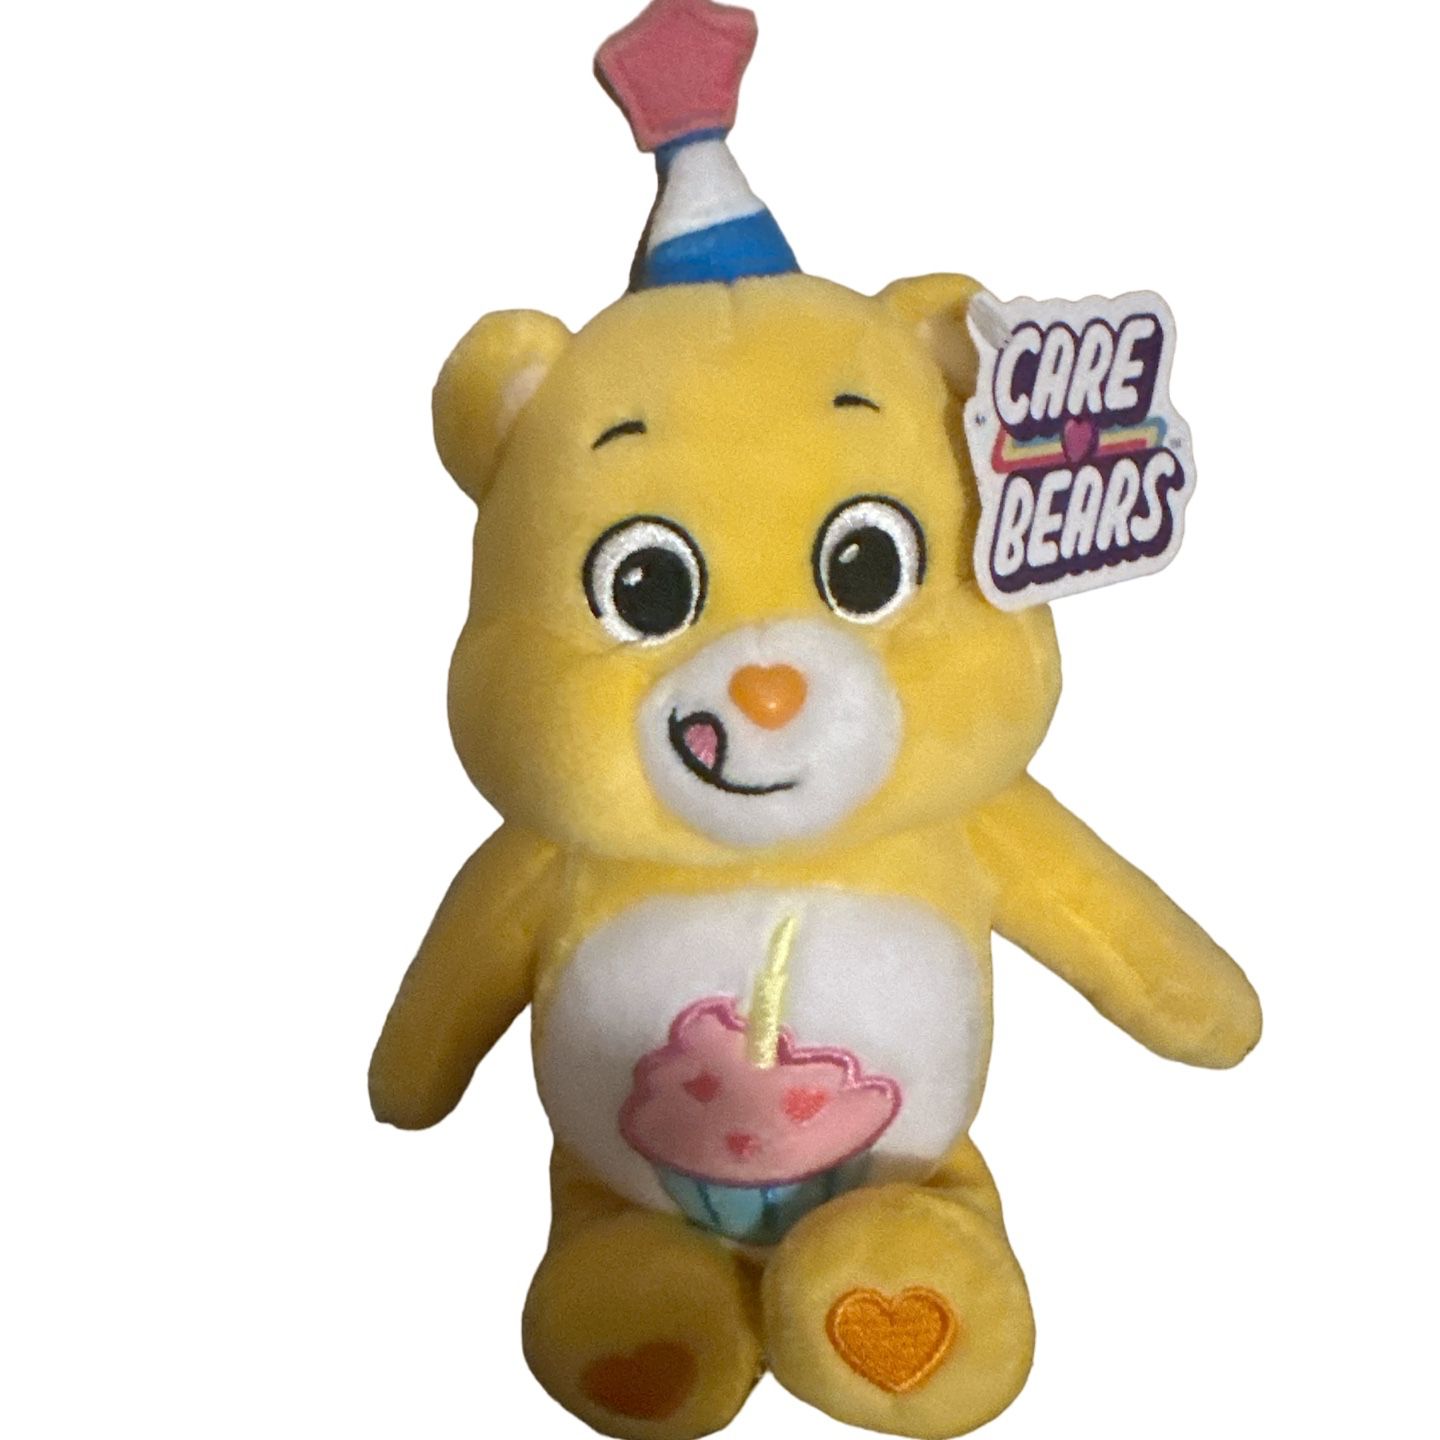 Care Bears 9" Bean Plush (Glitter Belly) - Birthday Bear - Soft Huggable Material! No original box